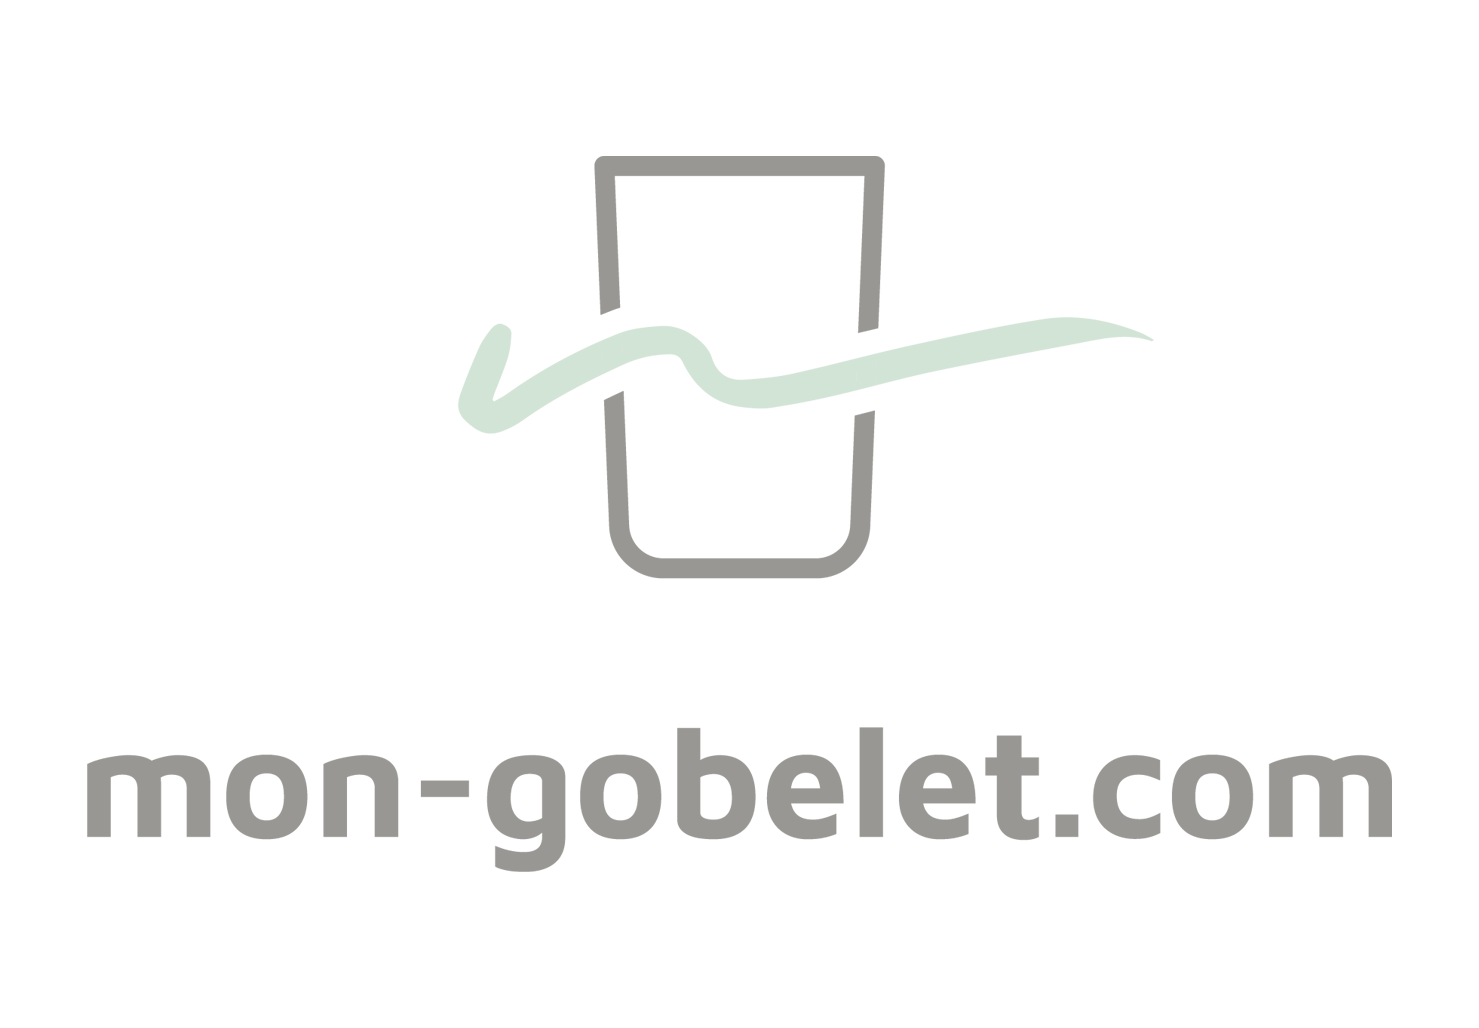 Mon-gobelet : outil de personnalisation de gobelets en ligne